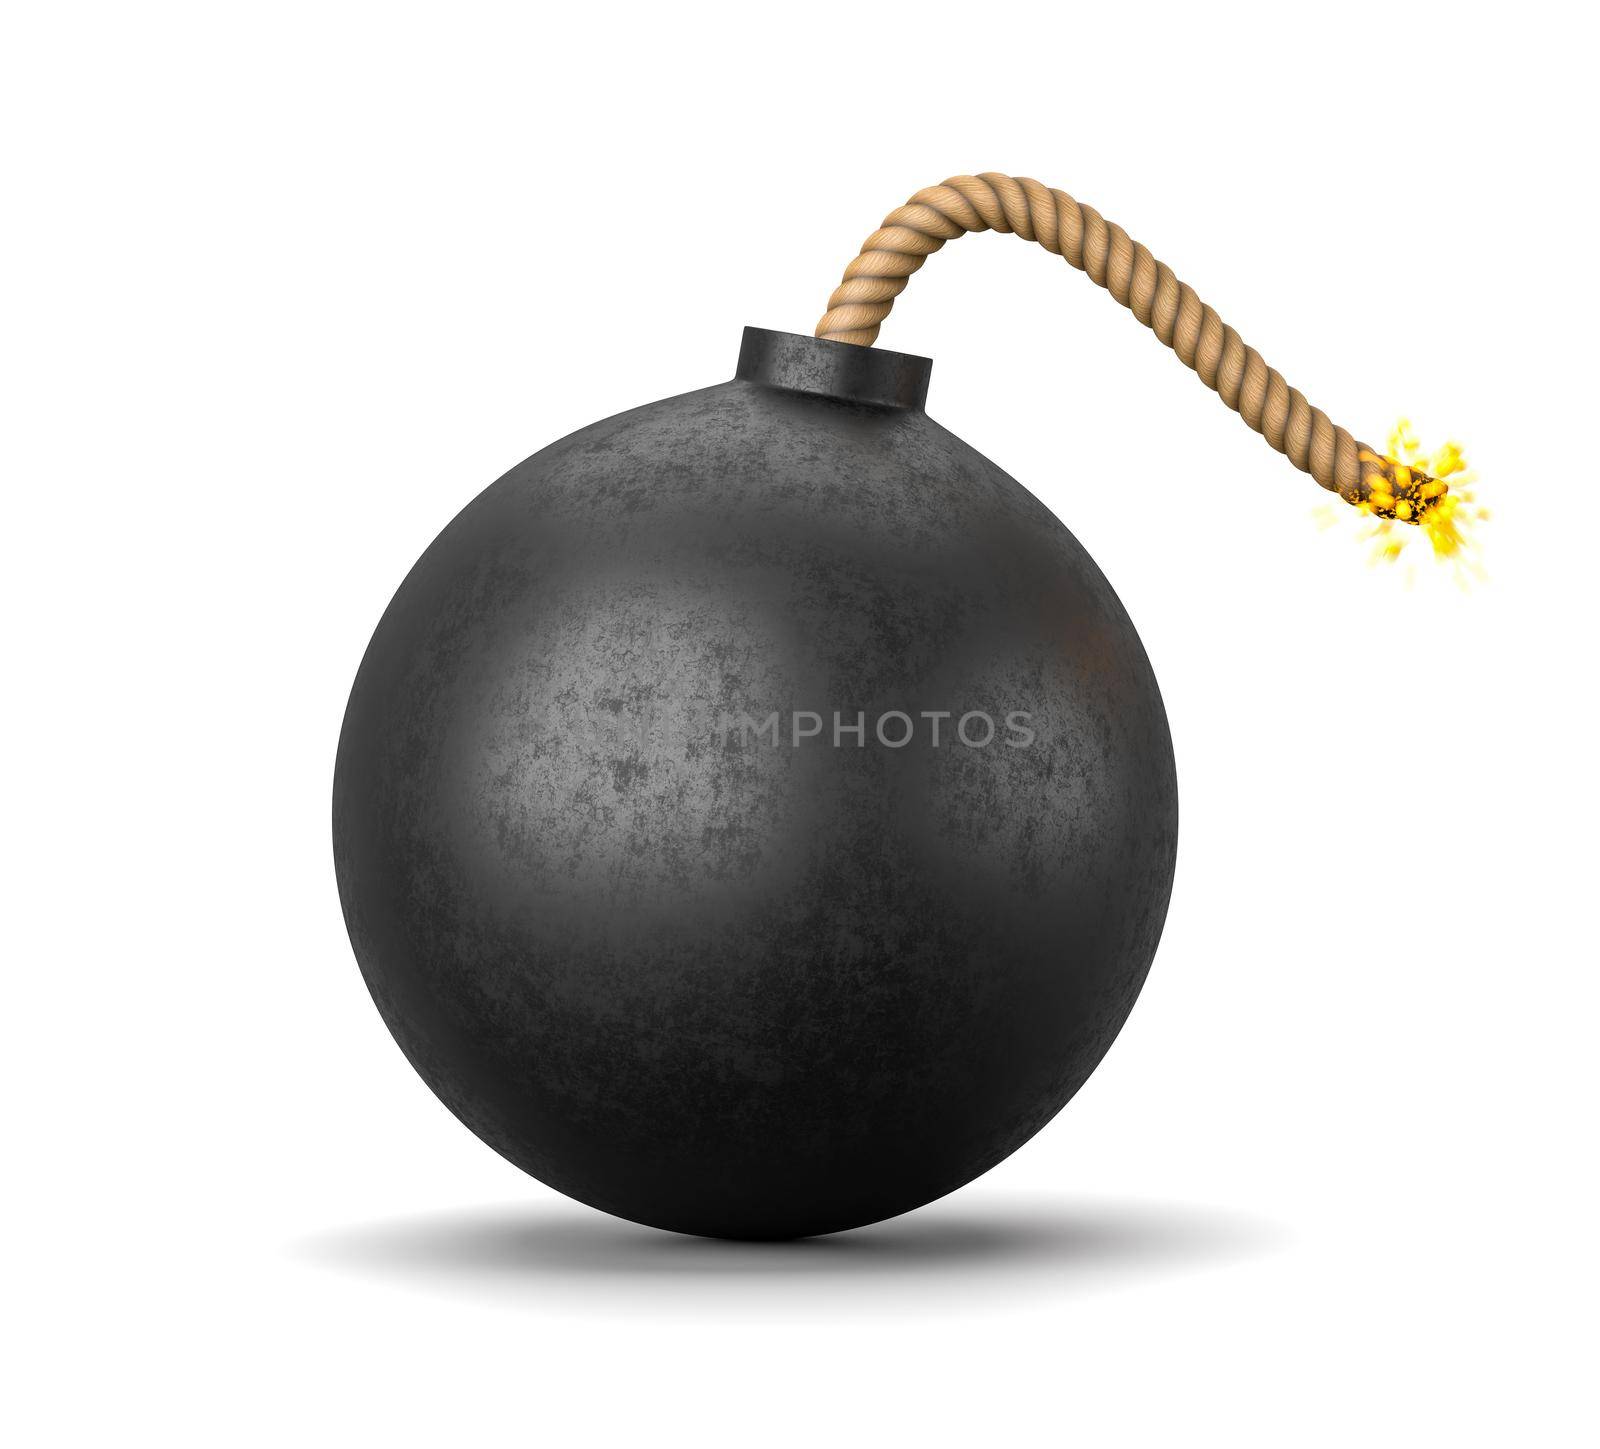 Black Cartoon Bomb with Lit Fuse on White Background 3D Illustration, Danger Concept